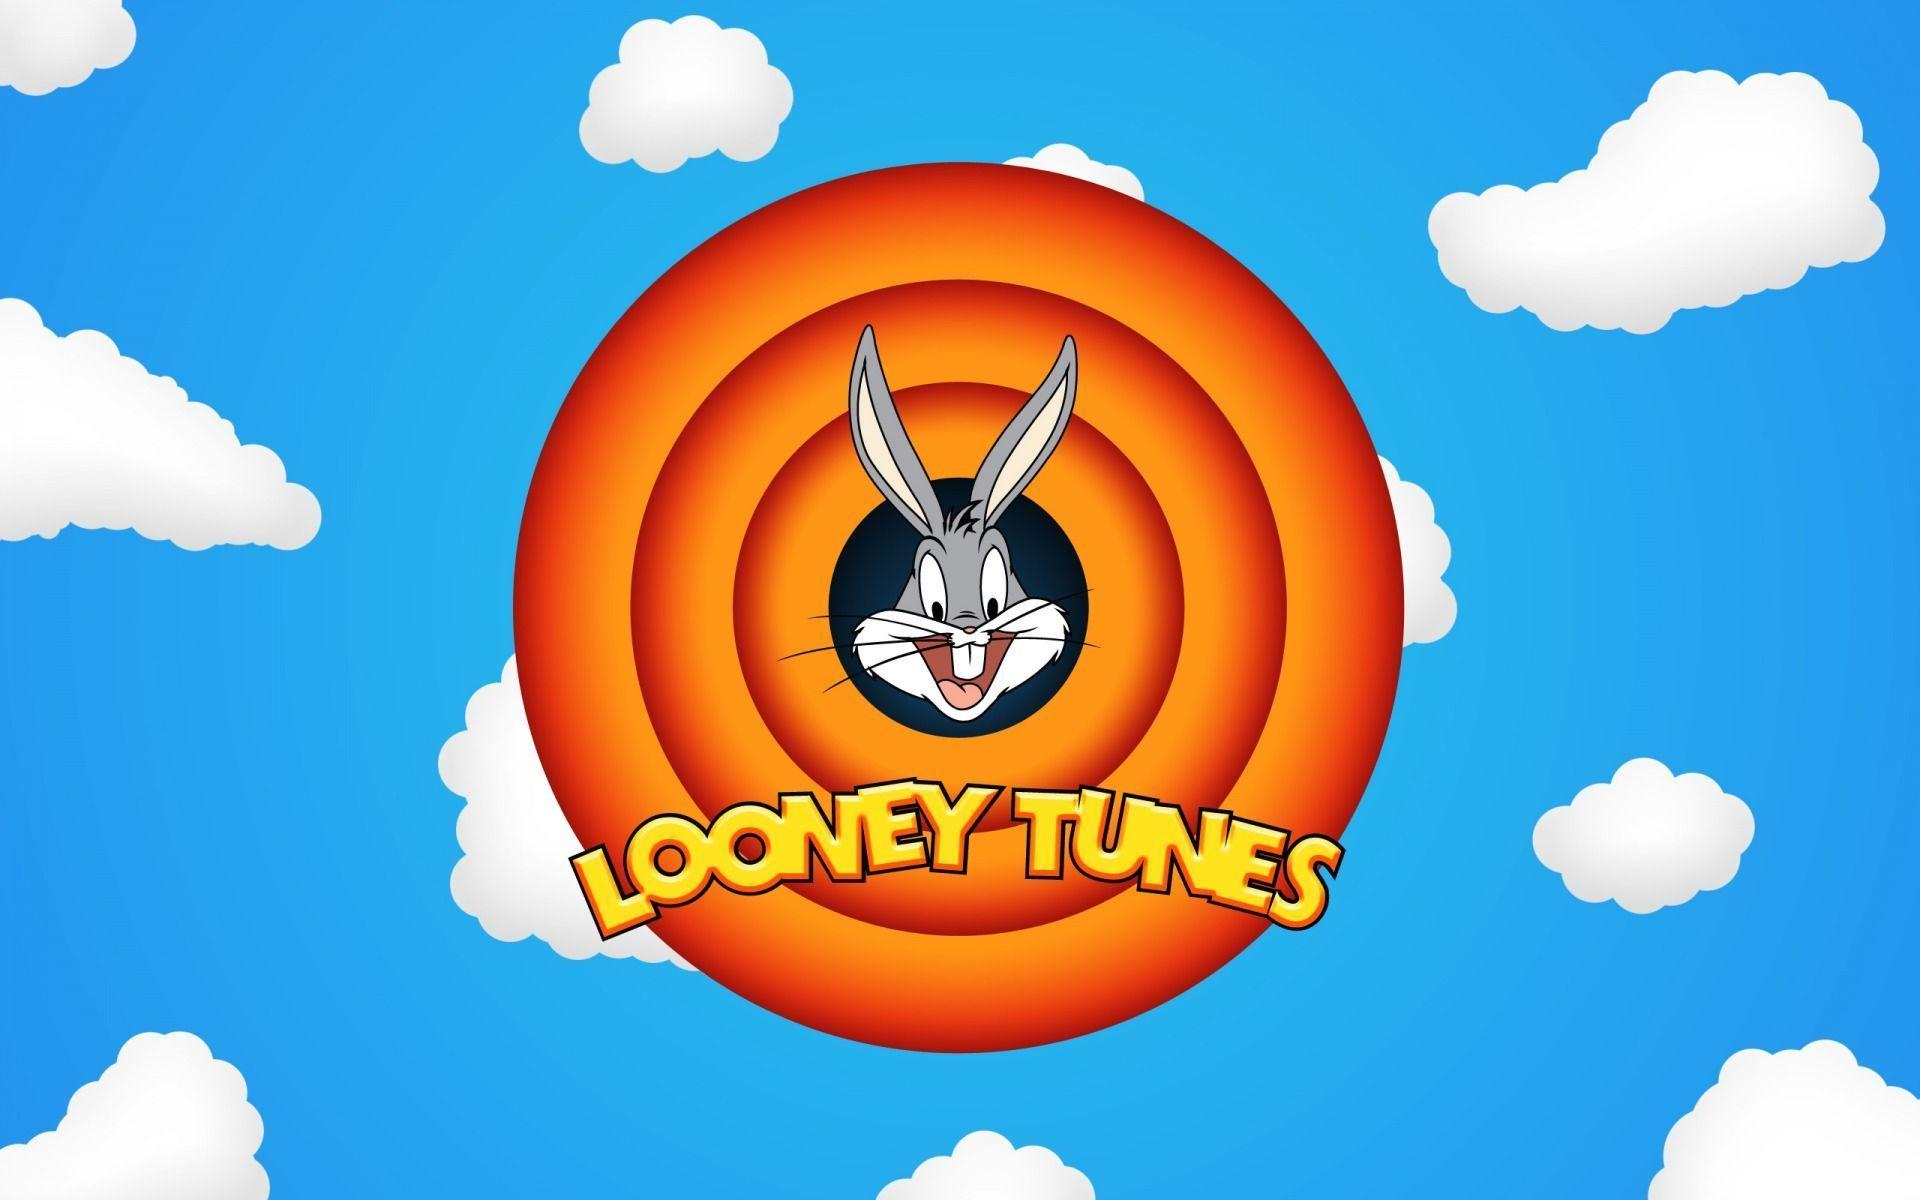 Bugs Bunny in Looney Tunes / Good